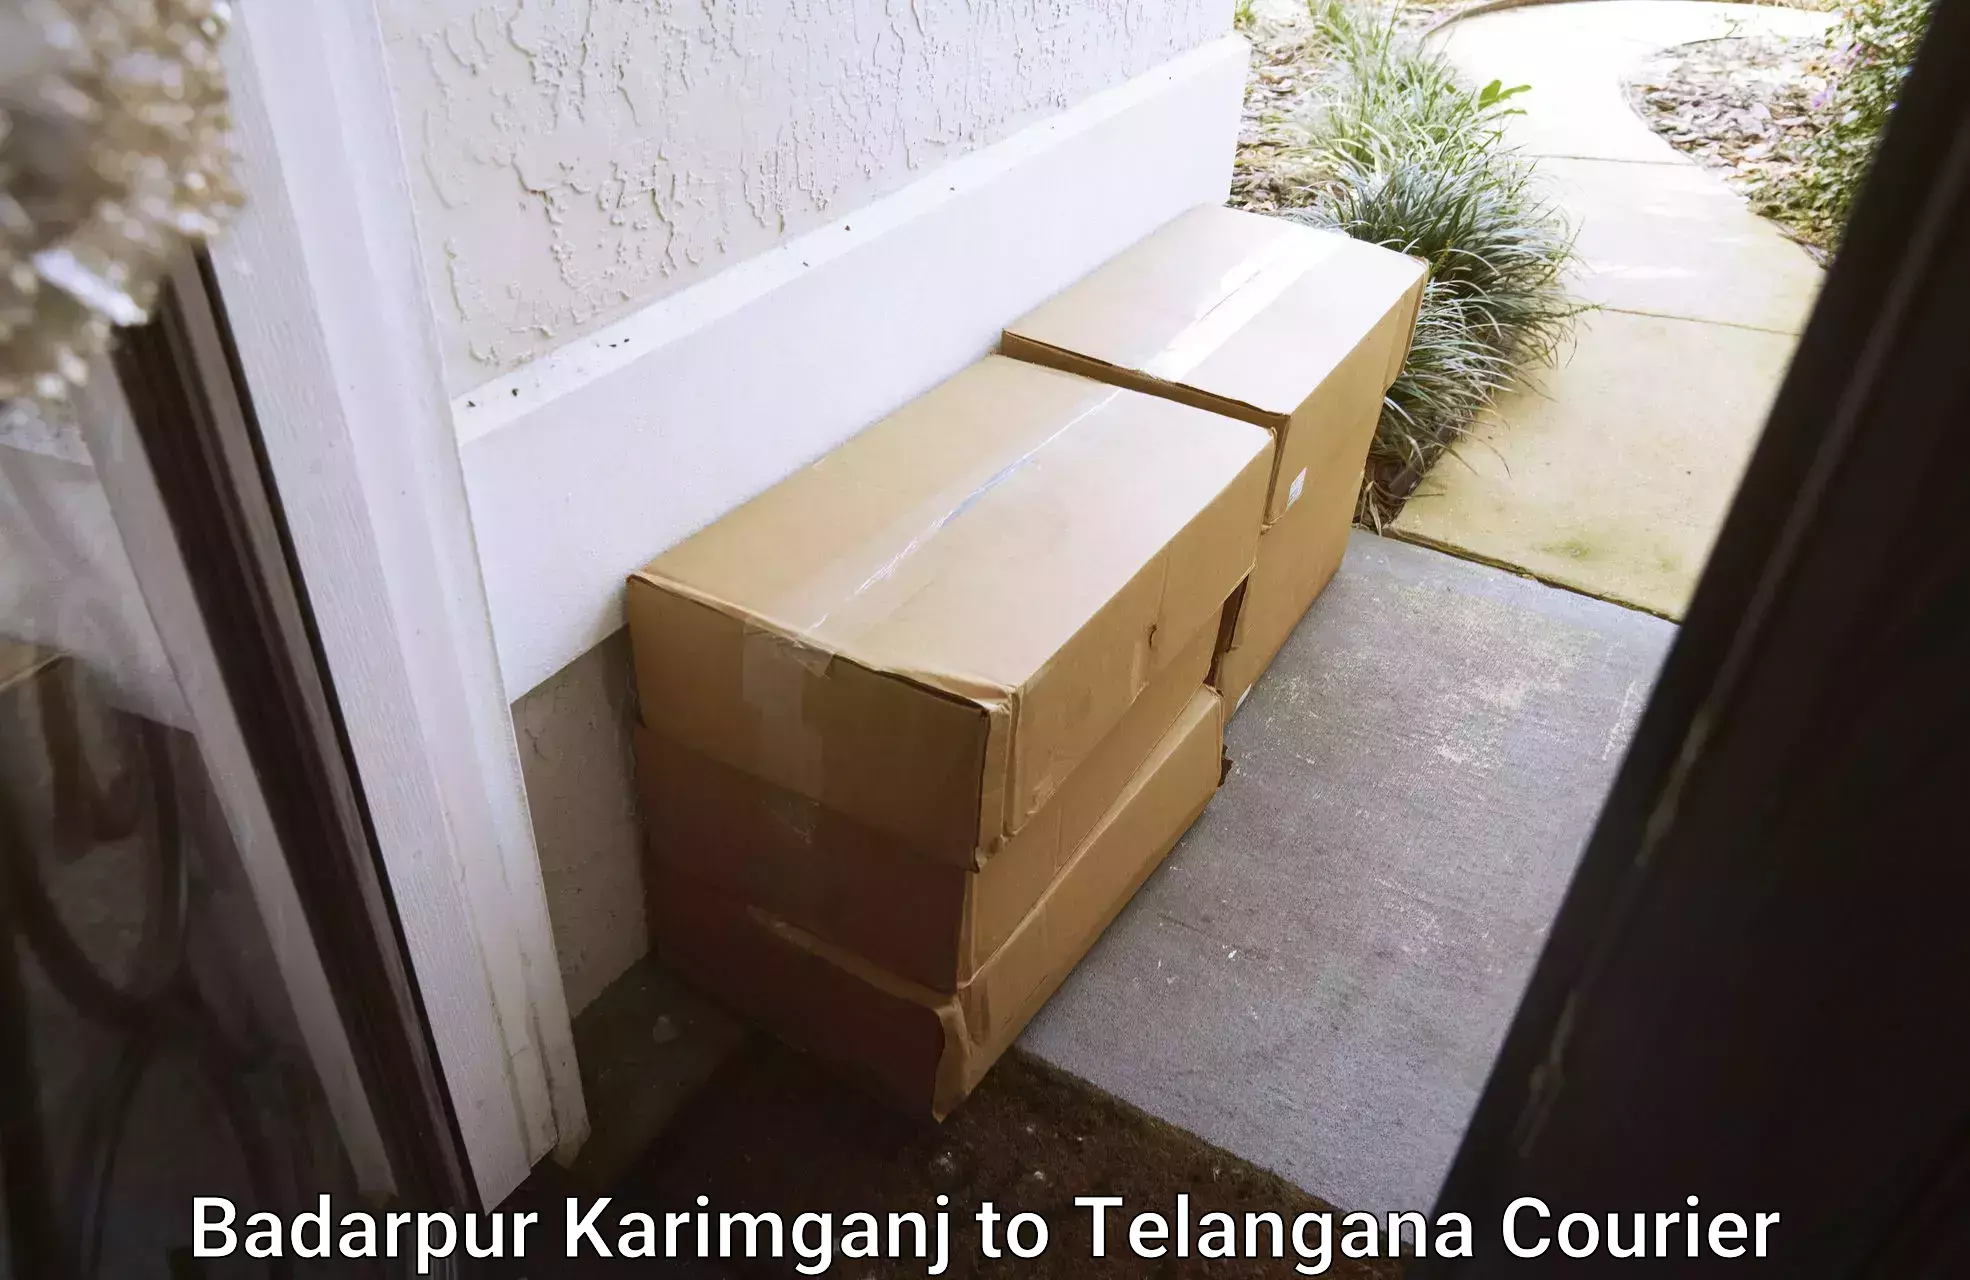 Same-day delivery solutions Badarpur Karimganj to Telangana